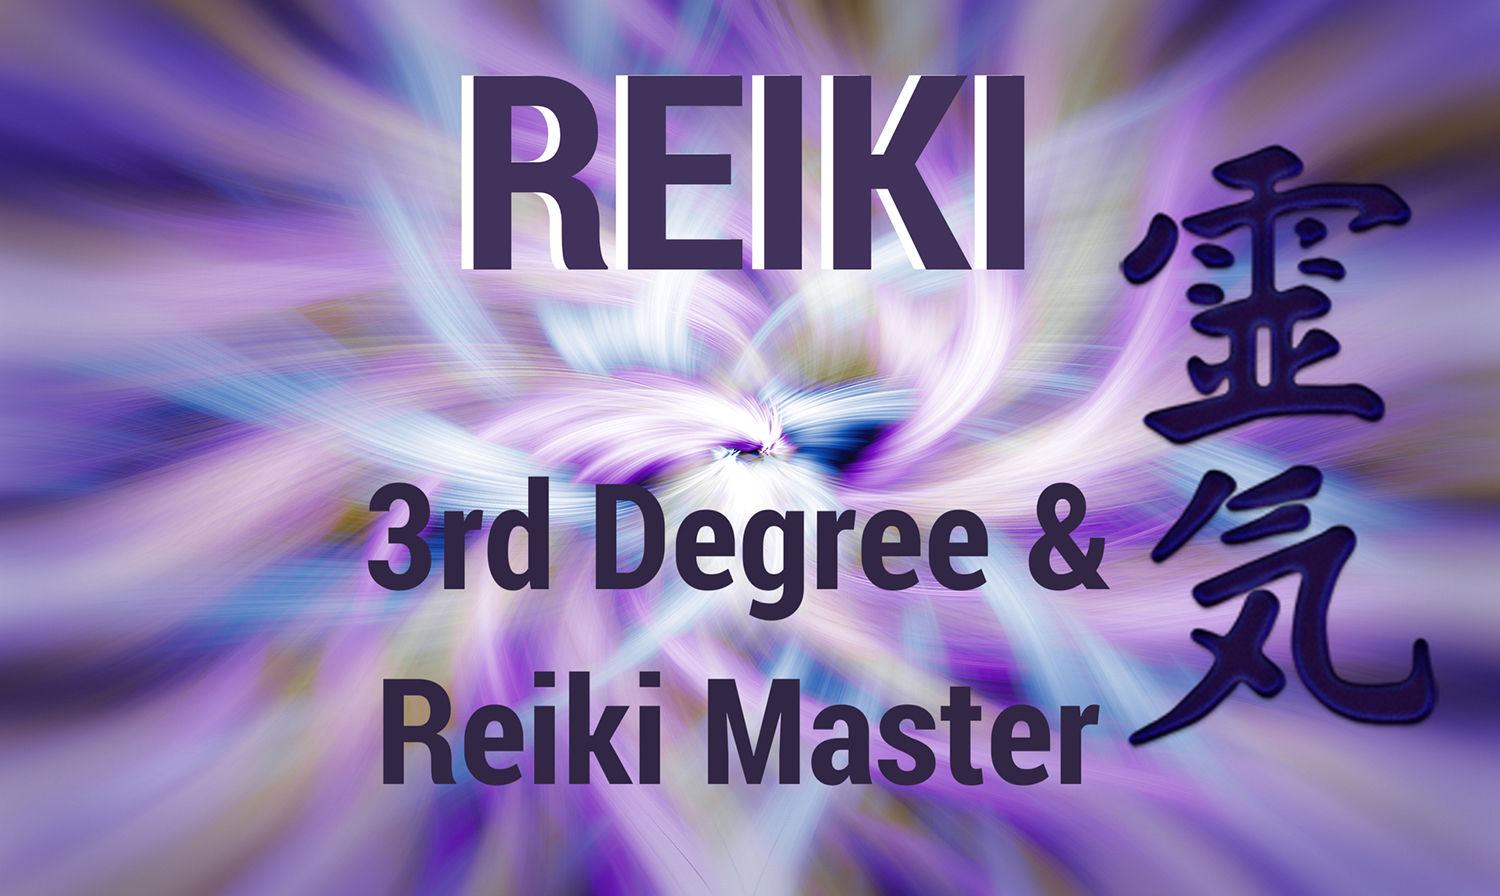 Reiki 3rd Degree and Reiki Master - HolisMultimedia